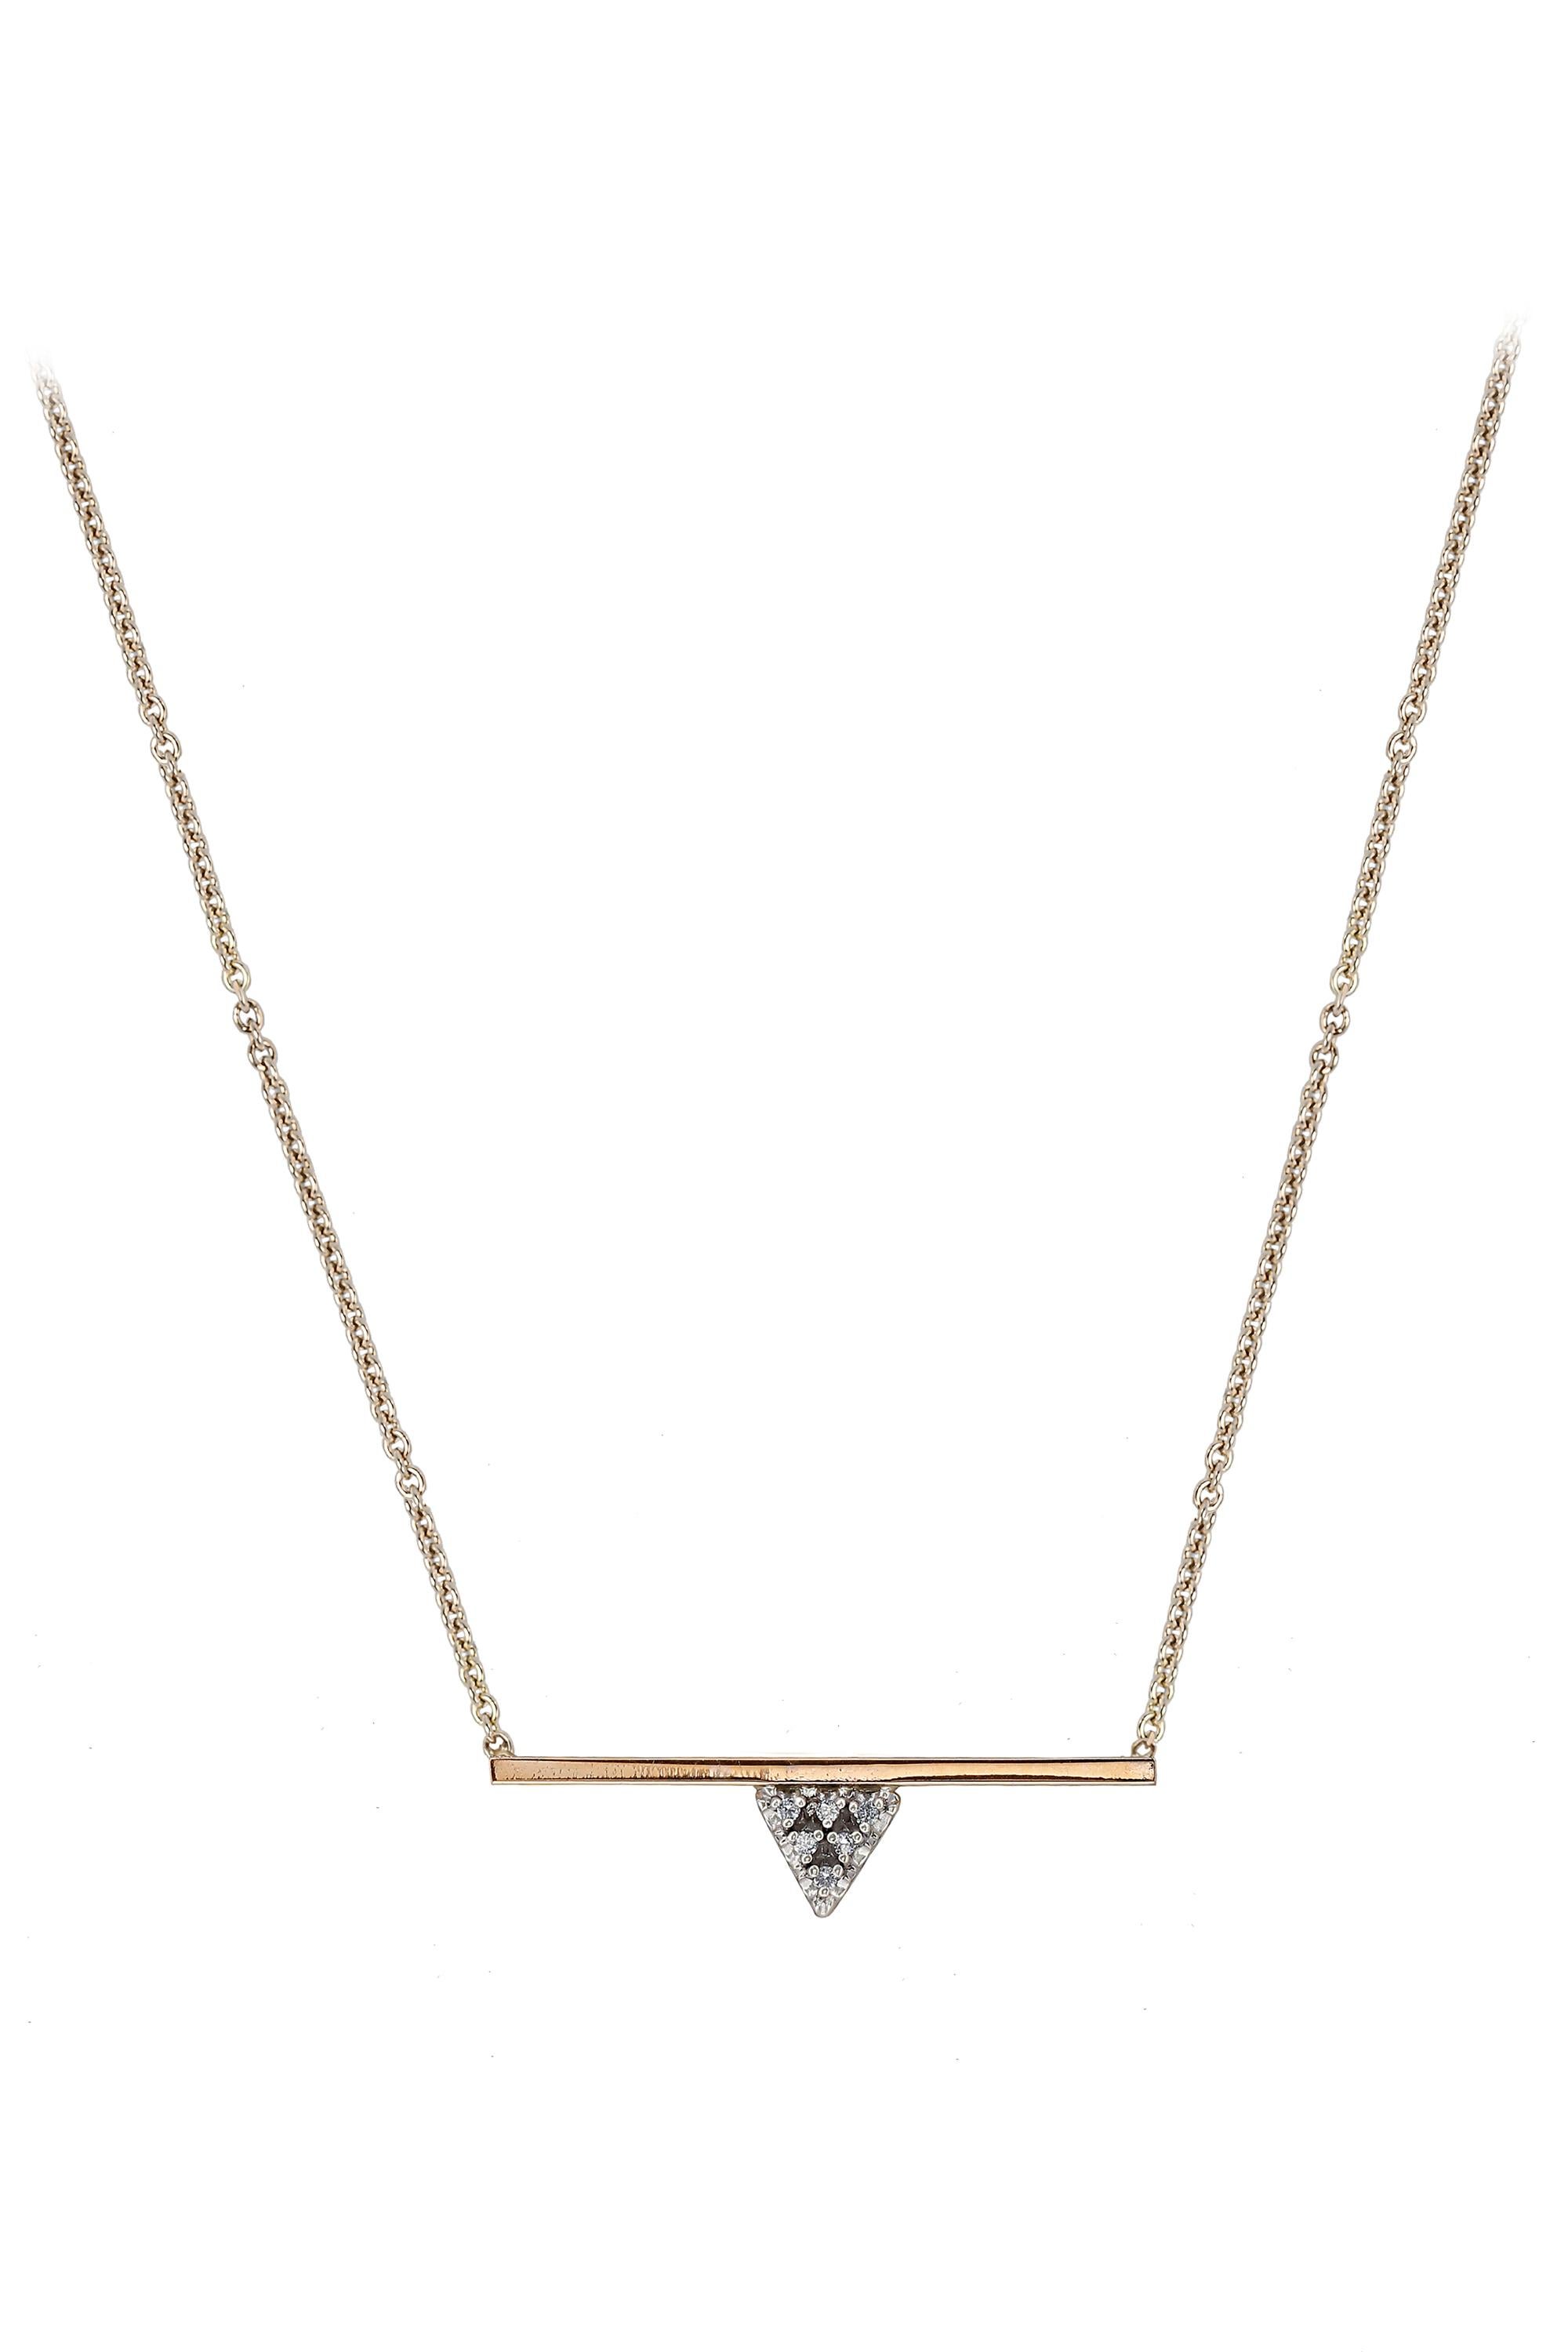 Modern 14k Gold Zoë Chicco Bar Triangle Diamond Pendant Necklace For Sale